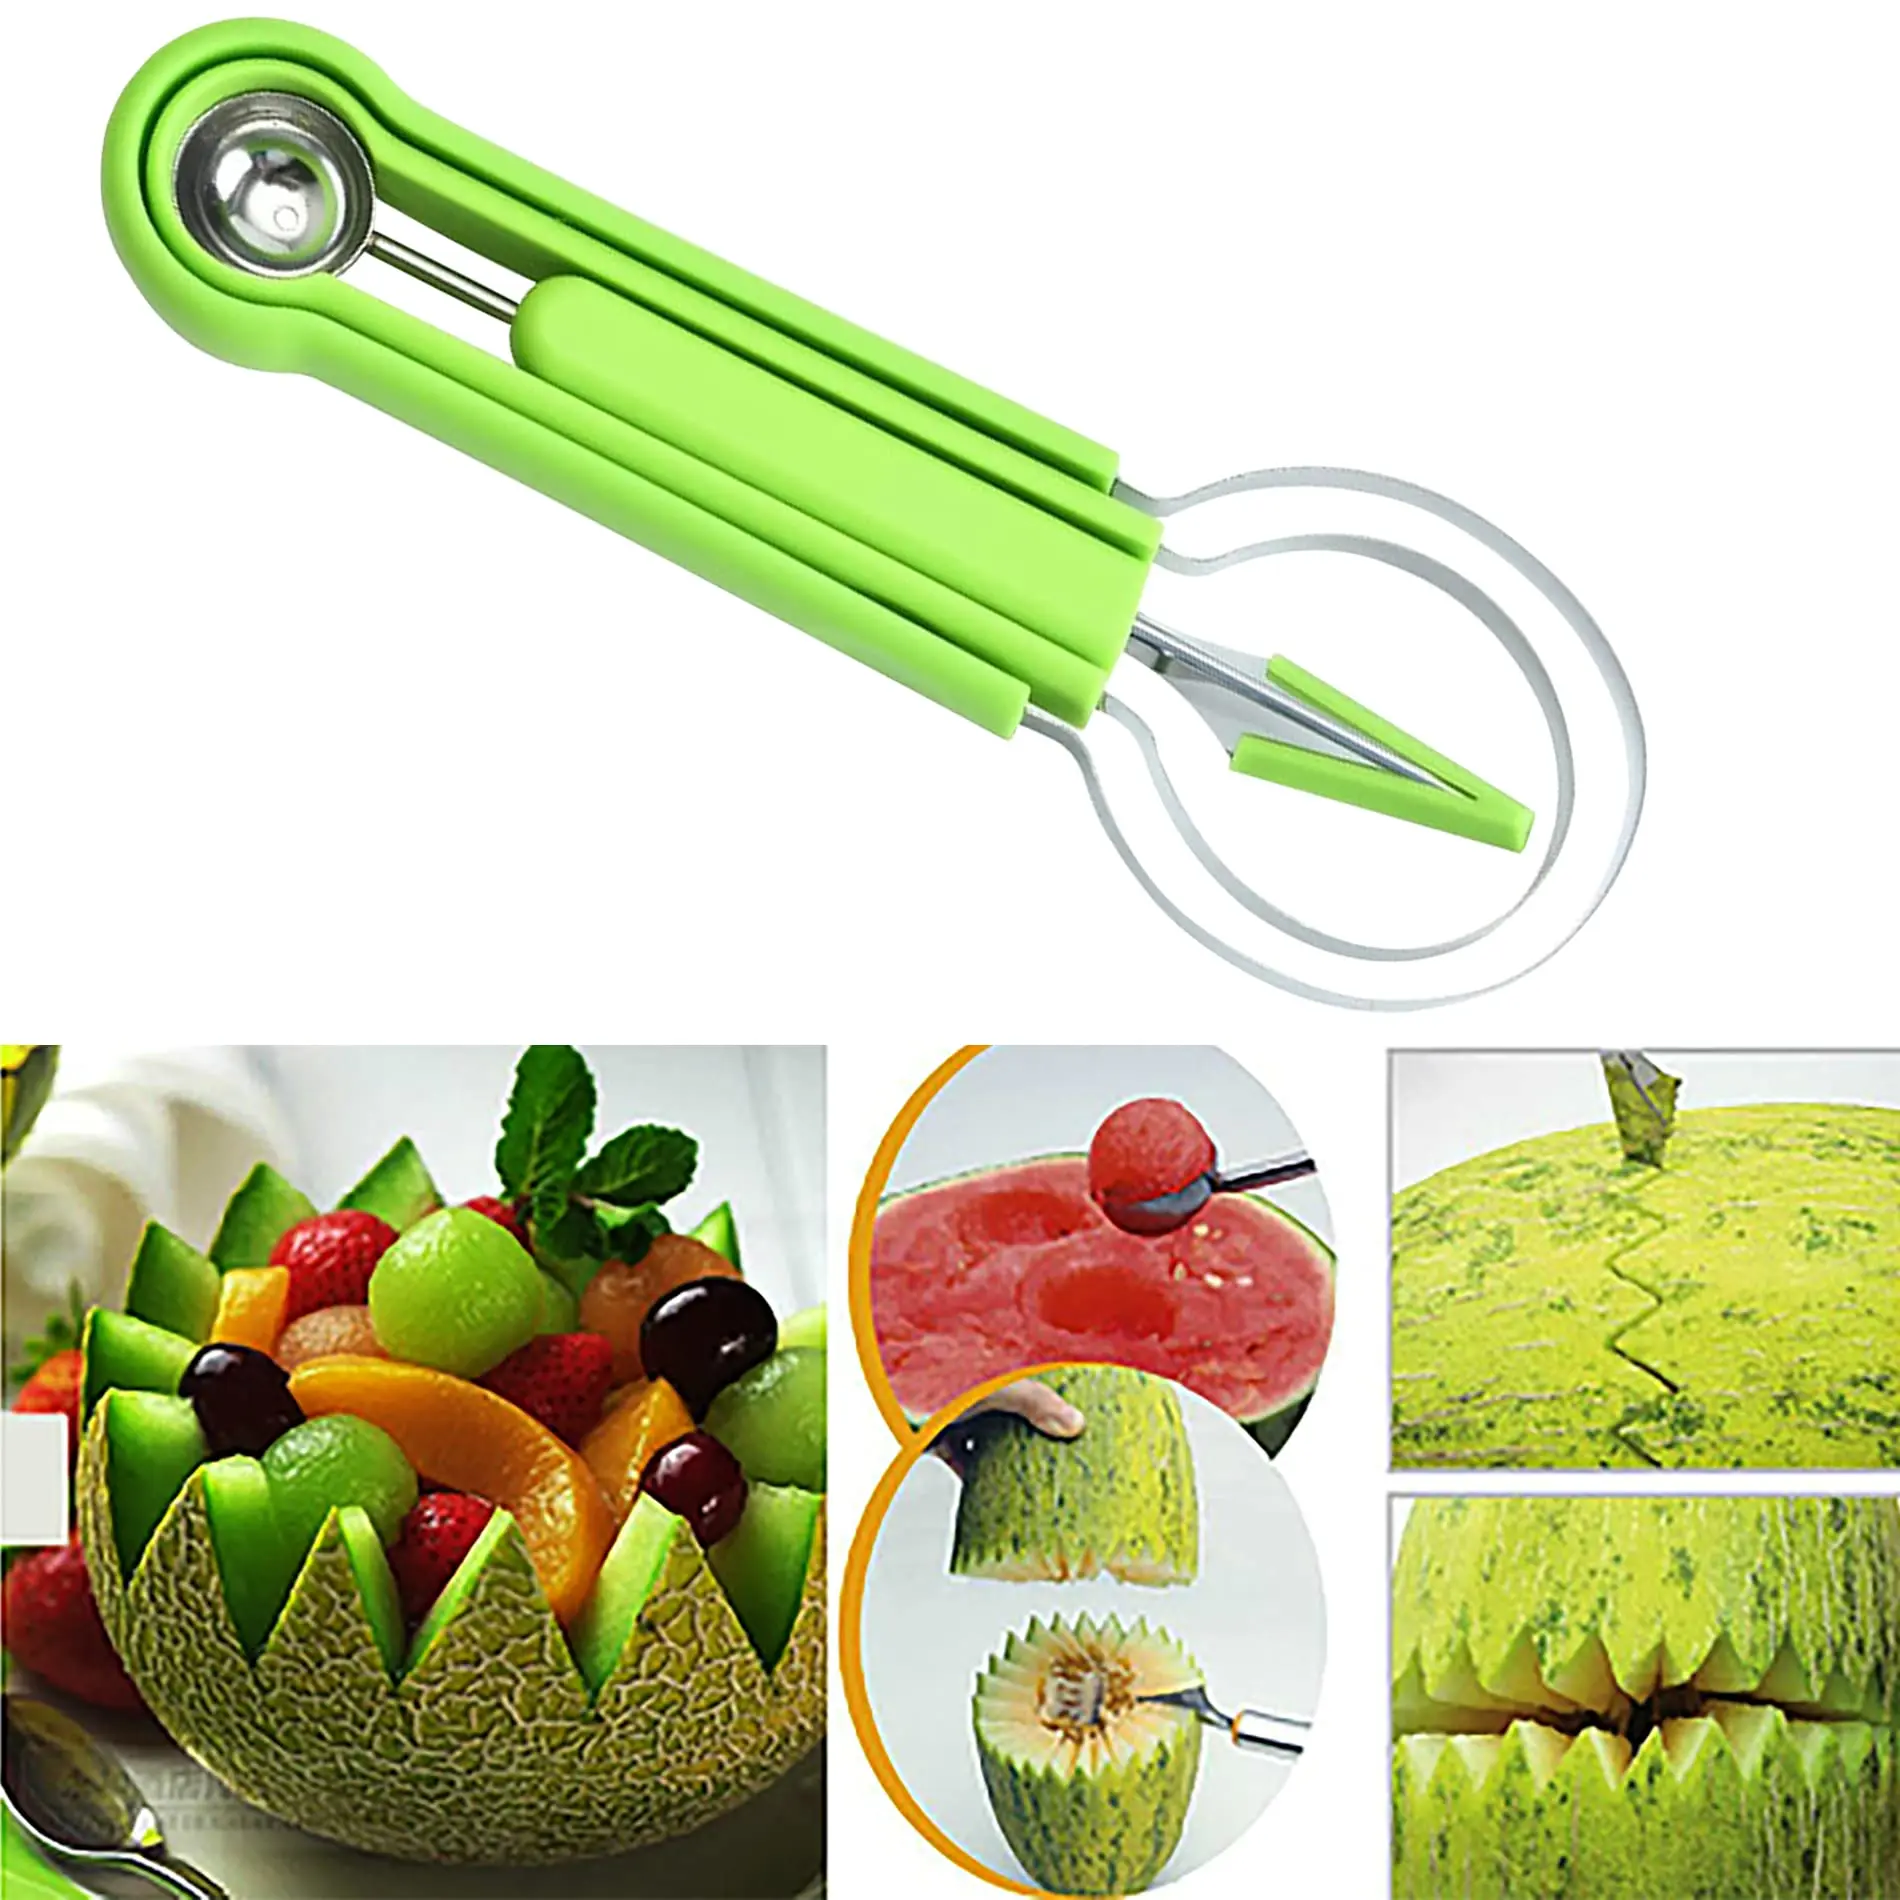 https://ae01.alicdn.com/kf/Se6a7c65ffa09475cb4d9820d98429c21Y/Multifunctional-Kitchen-Gadget-3-In-1-Fruit-Dig-Ball-Carving-Knife-Melon-Cutter-Scoop-Fruit-Peeler.jpg